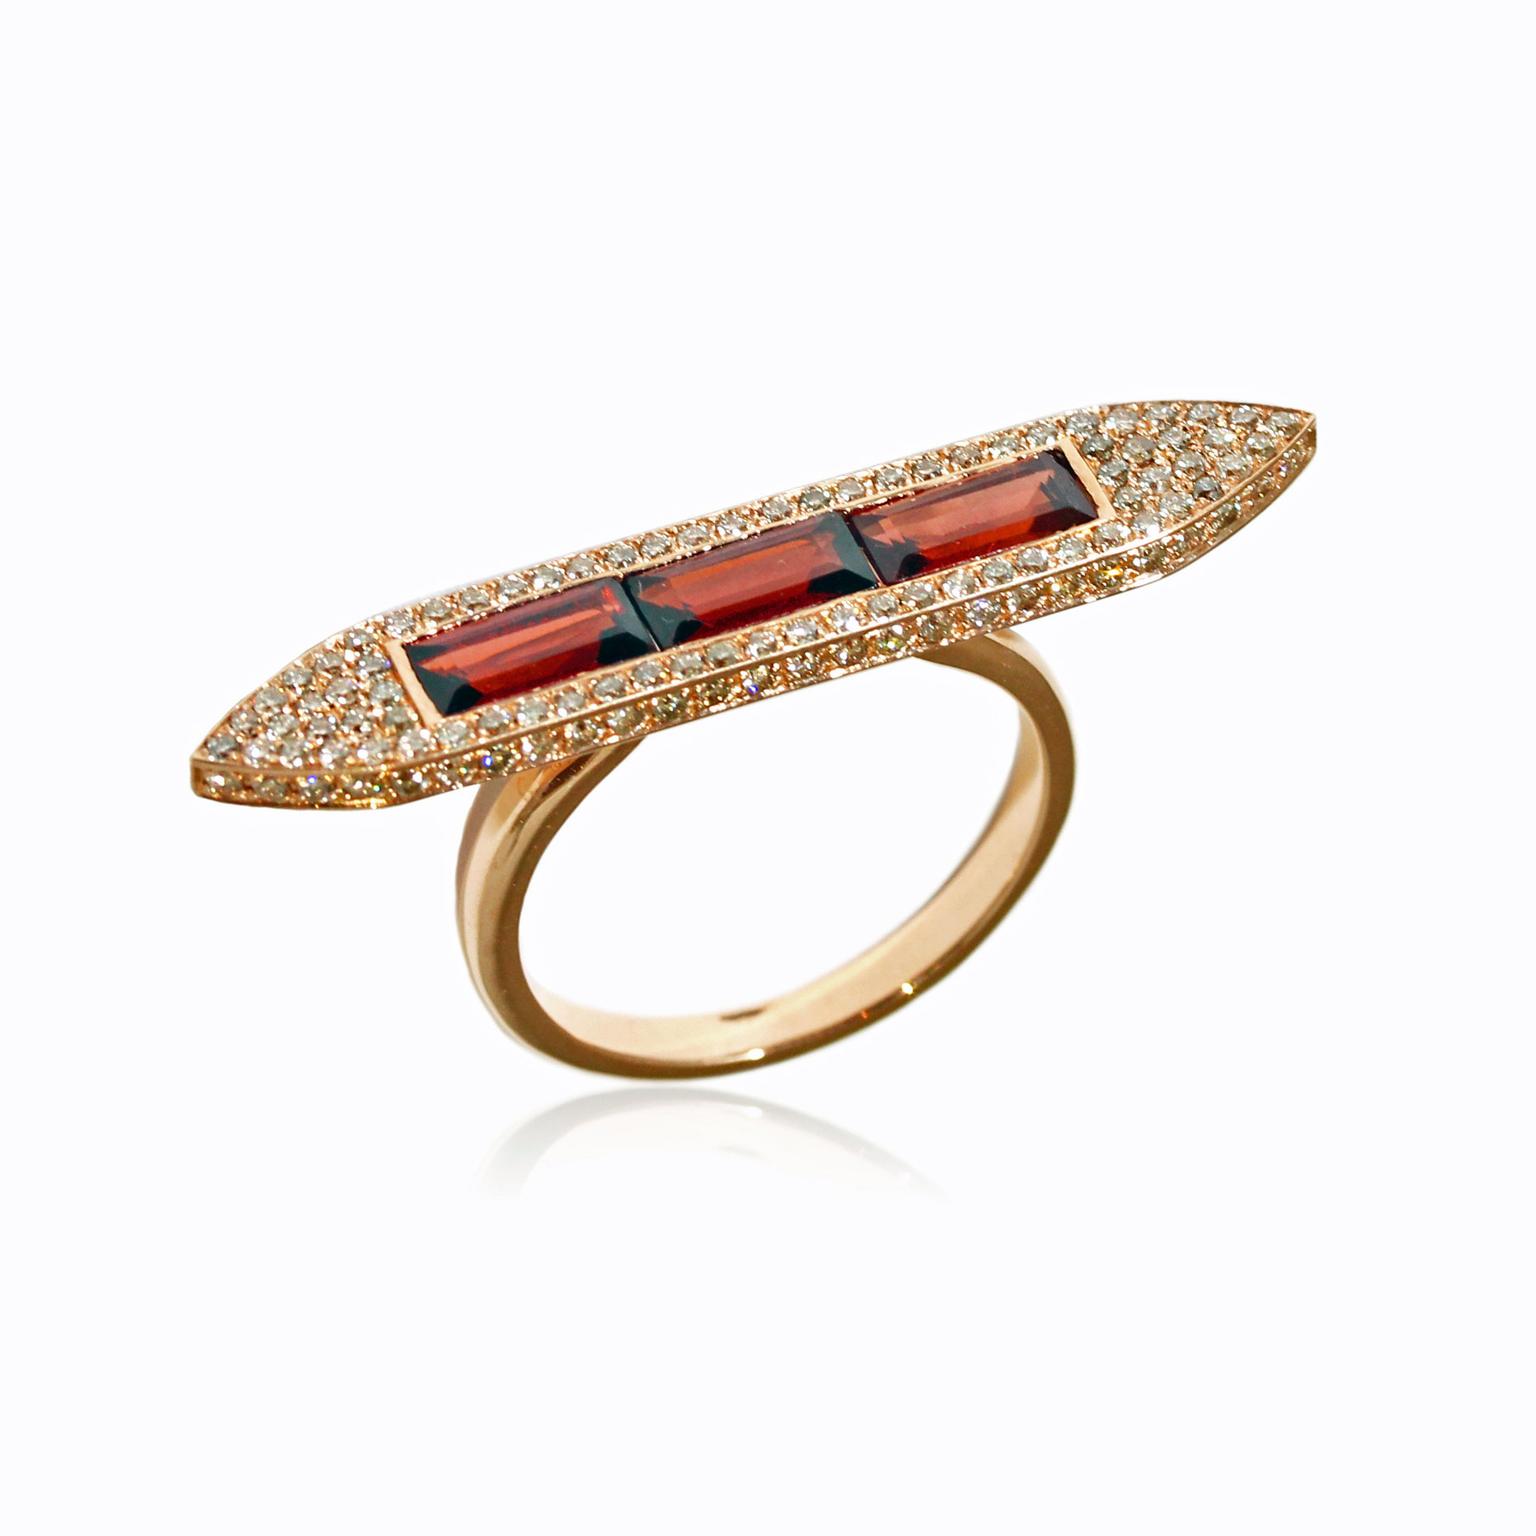 Ralph Masri geometric rose gold and diamond ring